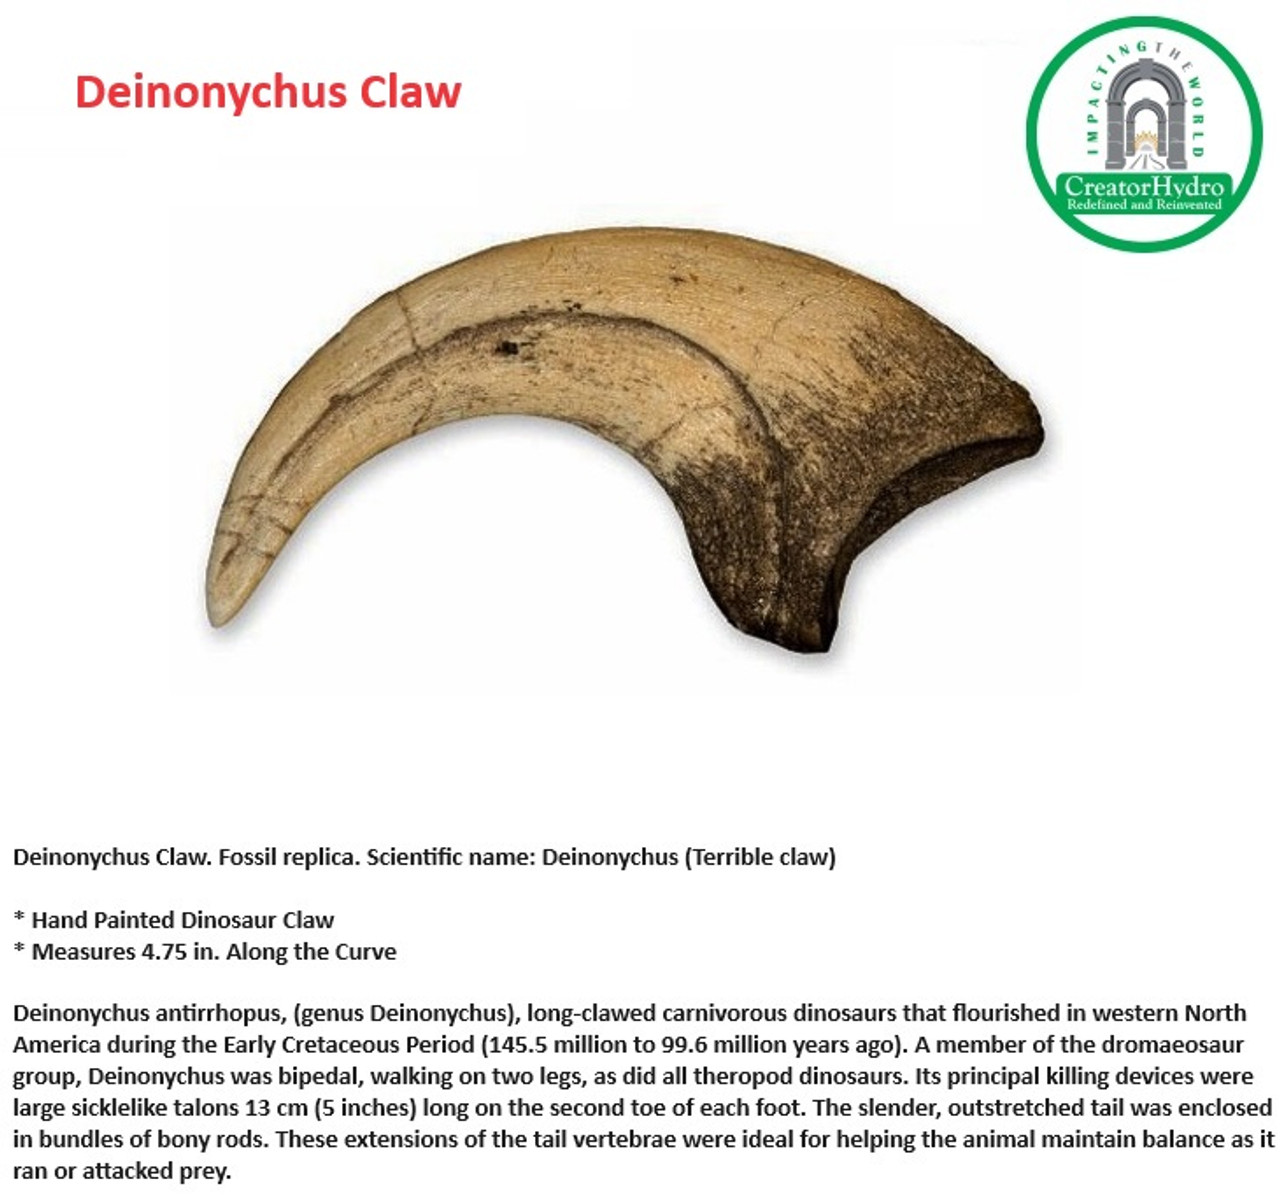 Deinonychus Claw | Size - 4.75 in | Dinosaur Claw